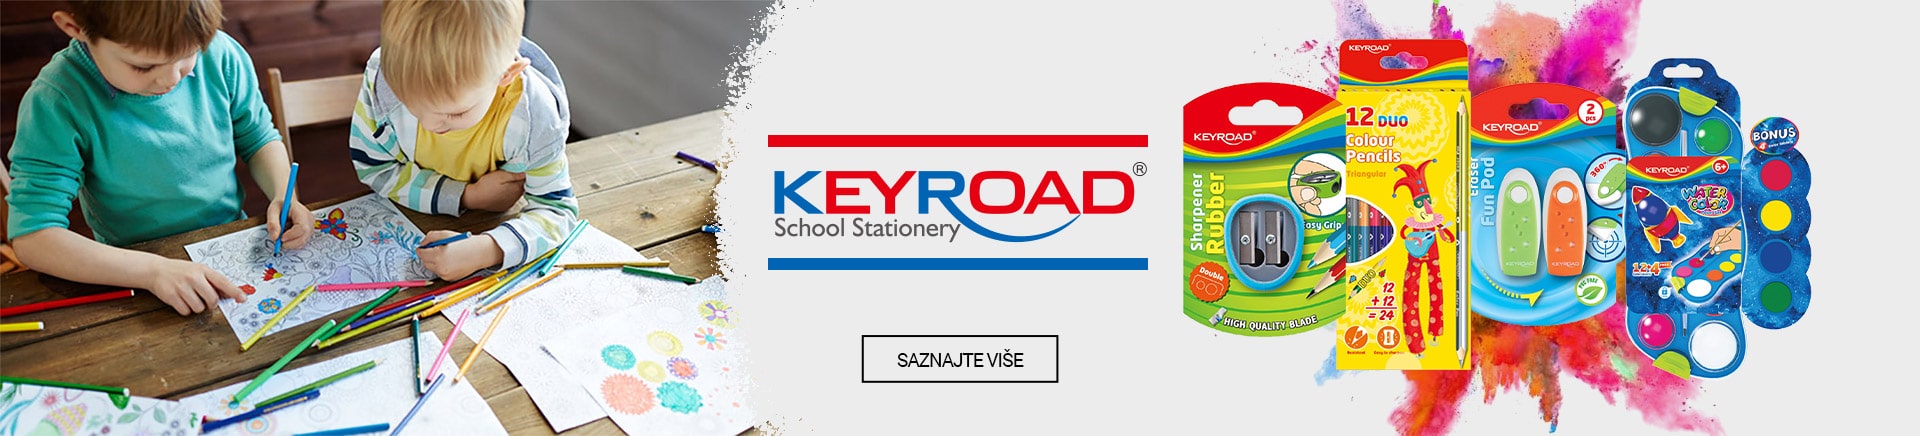 Keyroad školski pribor